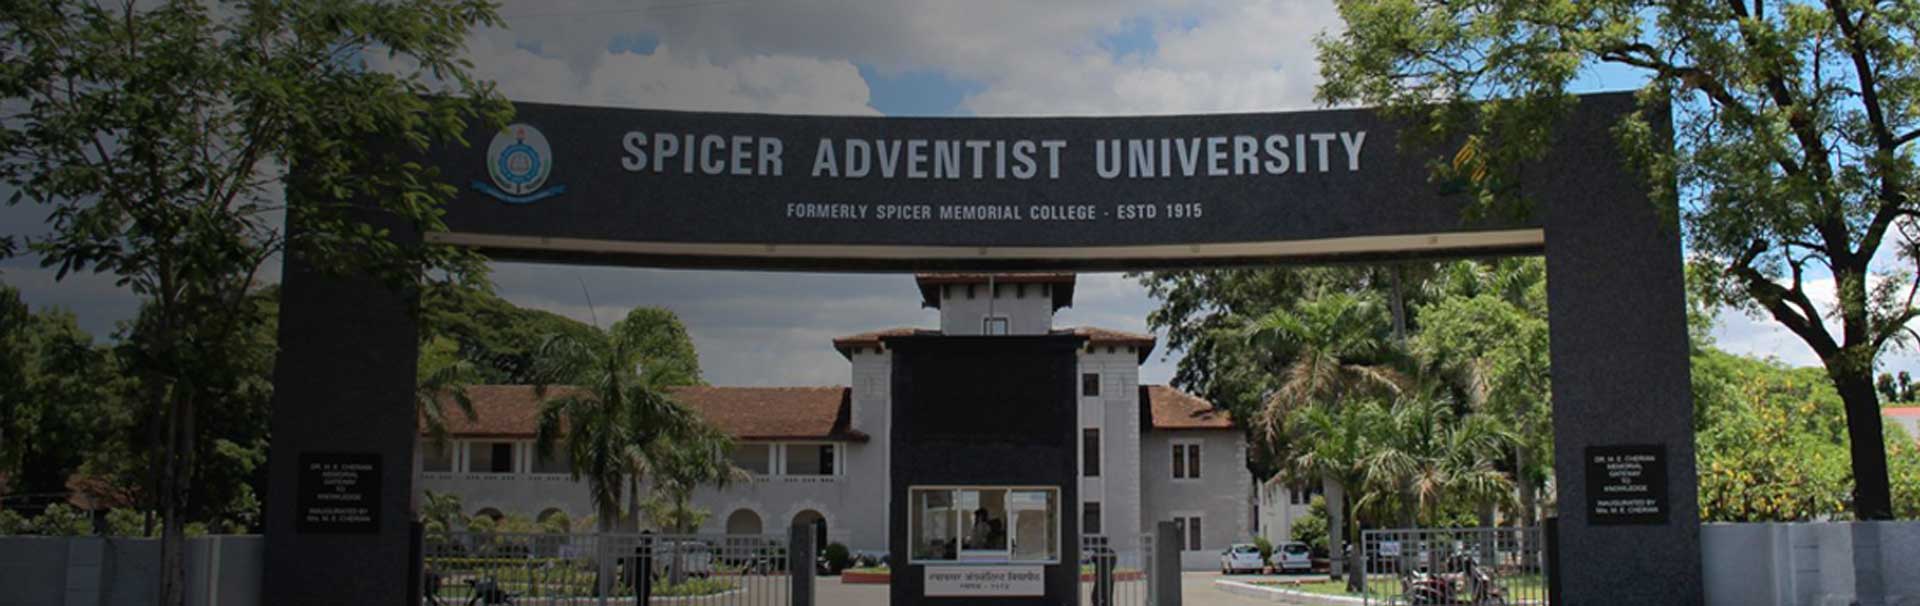 Spicer Adventist University, Near Commissionerate of Animal Husbandry, Aundh Road, Pune 